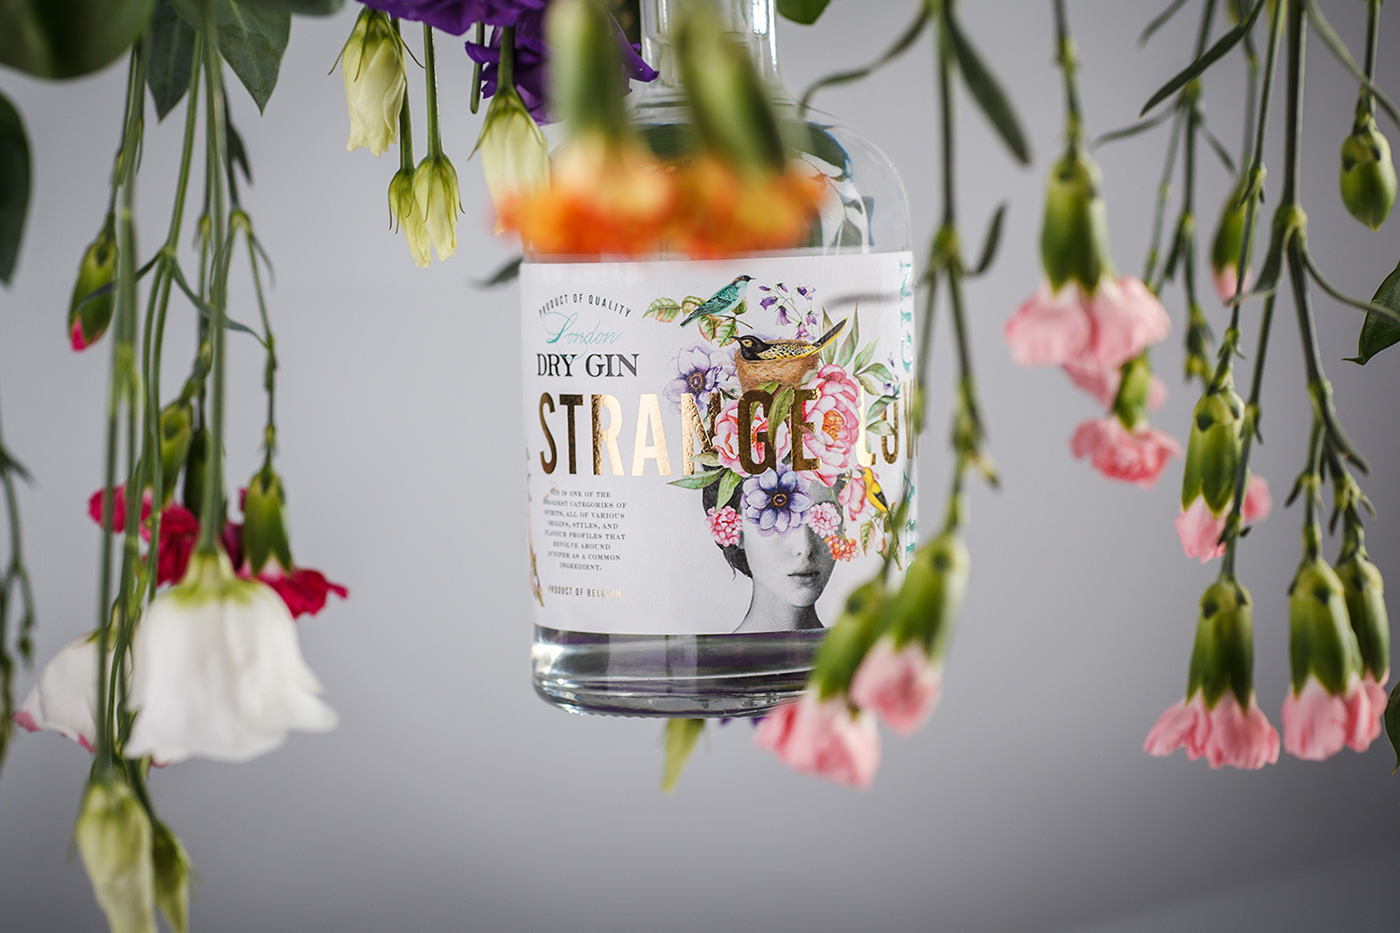 strange luve 43oz design studio label design dry gin surreal Moldova belgium Flowers Packaging